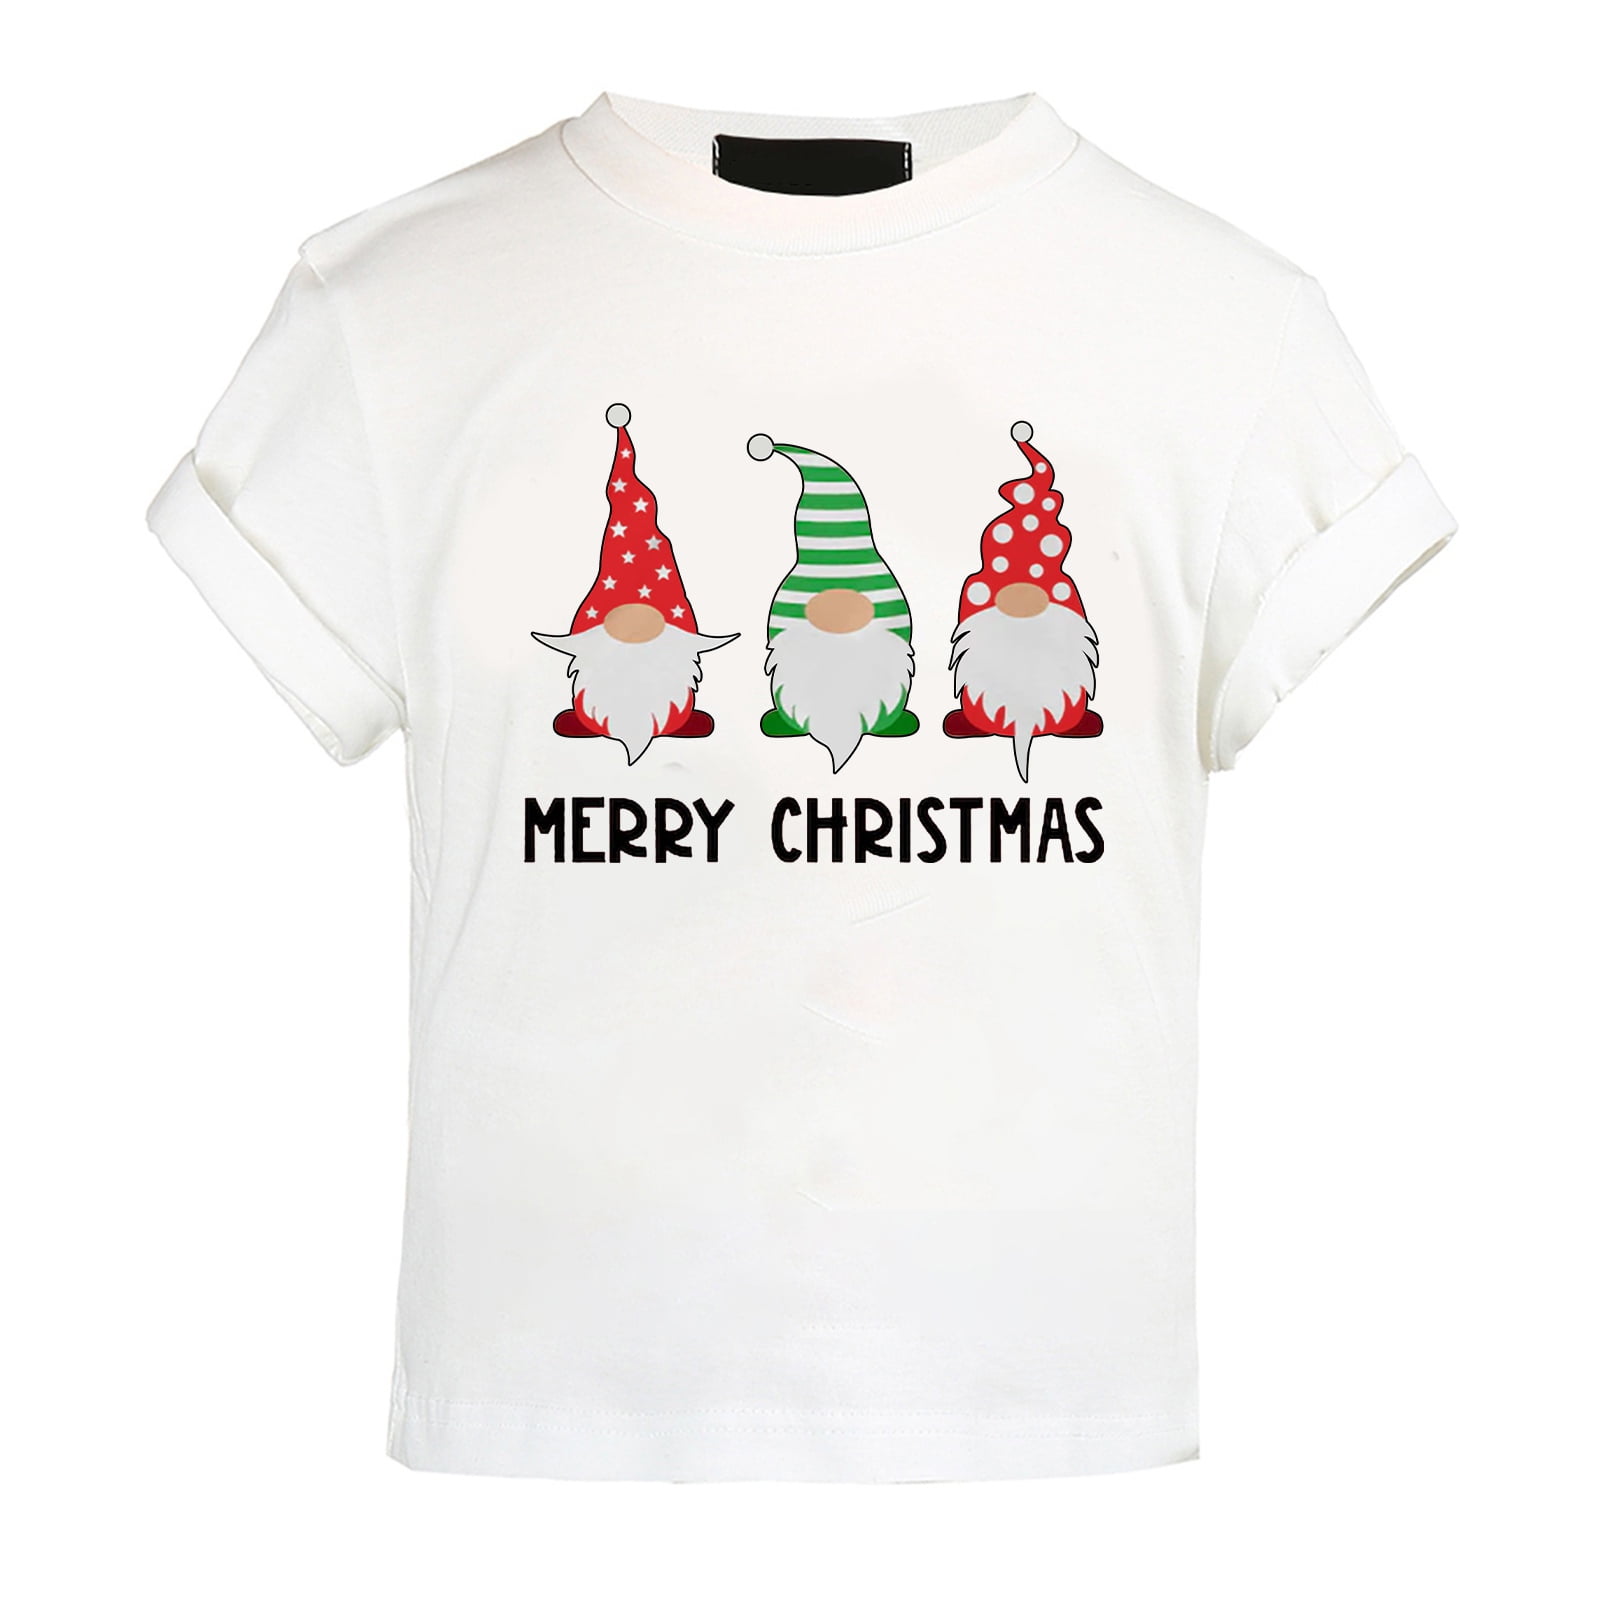 This Girl Loves Christmas Cute Short-Sleeve Unisex T-Shirt